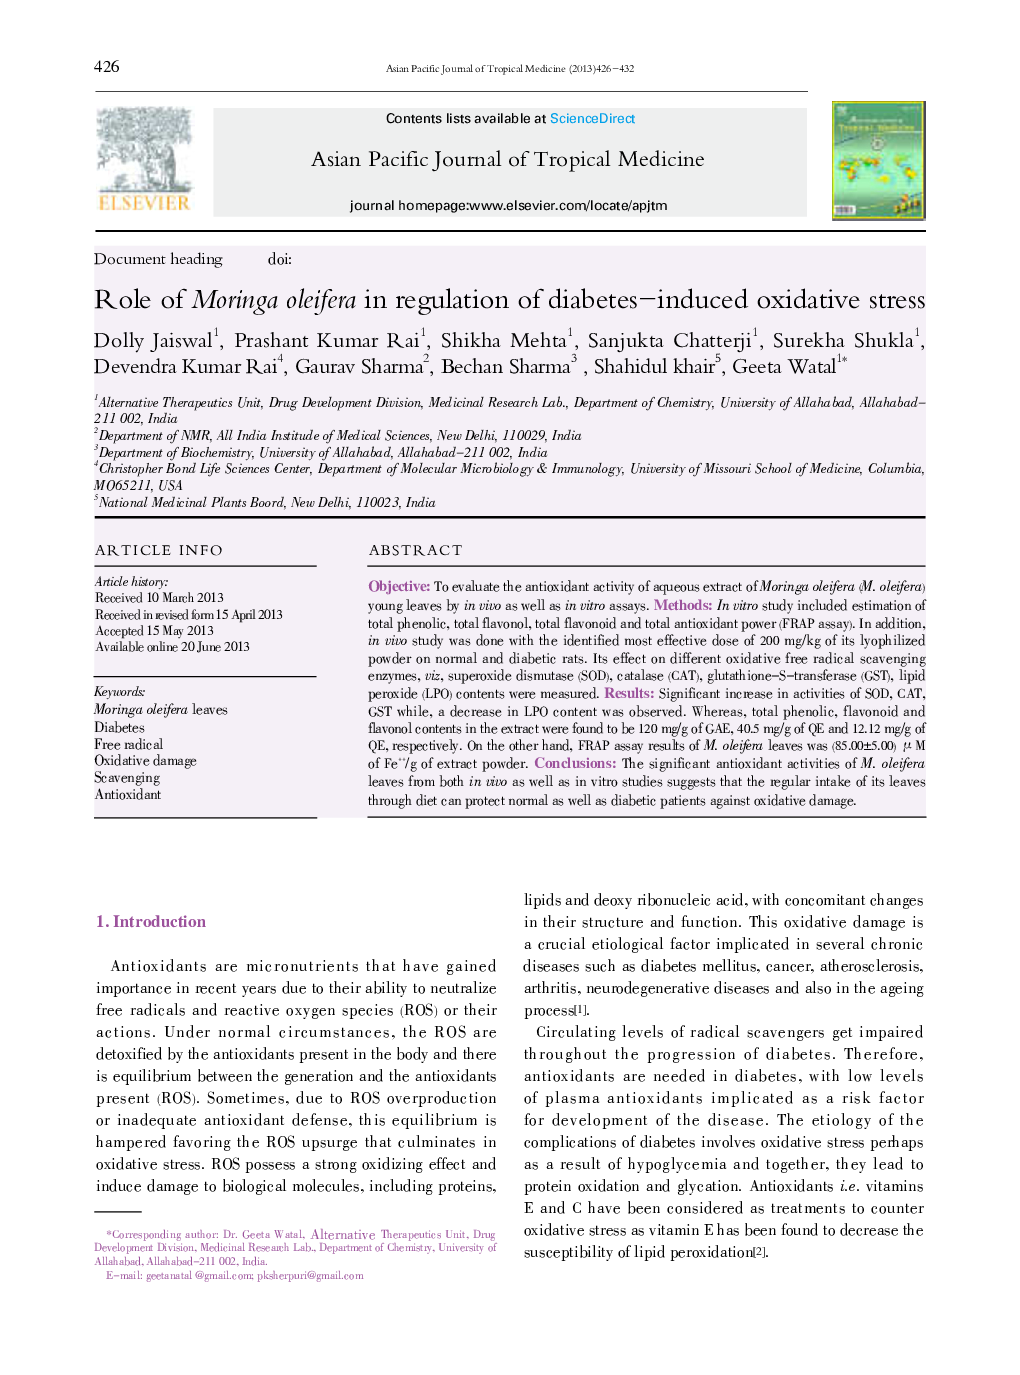 Role of Moringa oleifera in regulation of diabetes-induced oxidative stress 